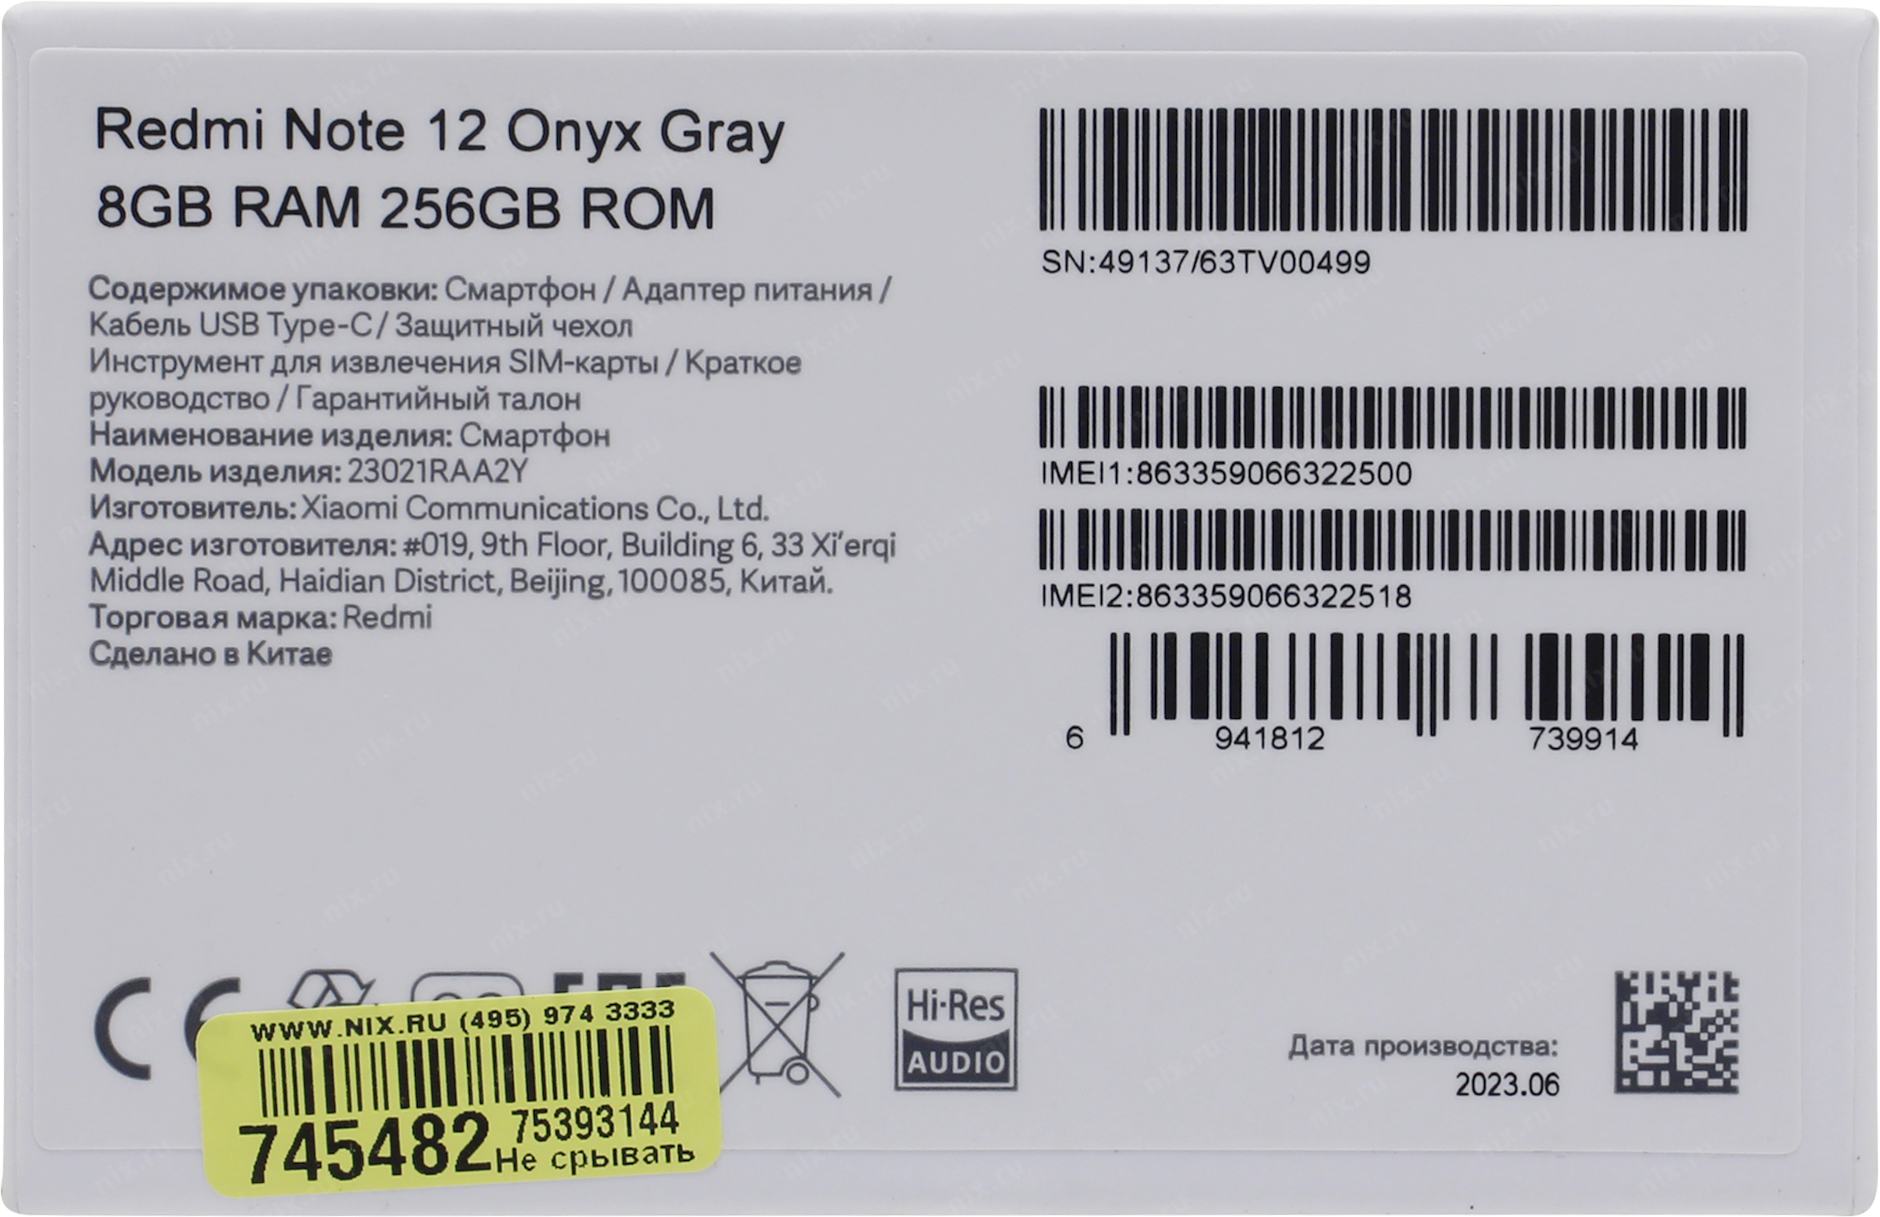 Redmi note 12 onyx gray 256gb. S926 12/256 Gray s24+.